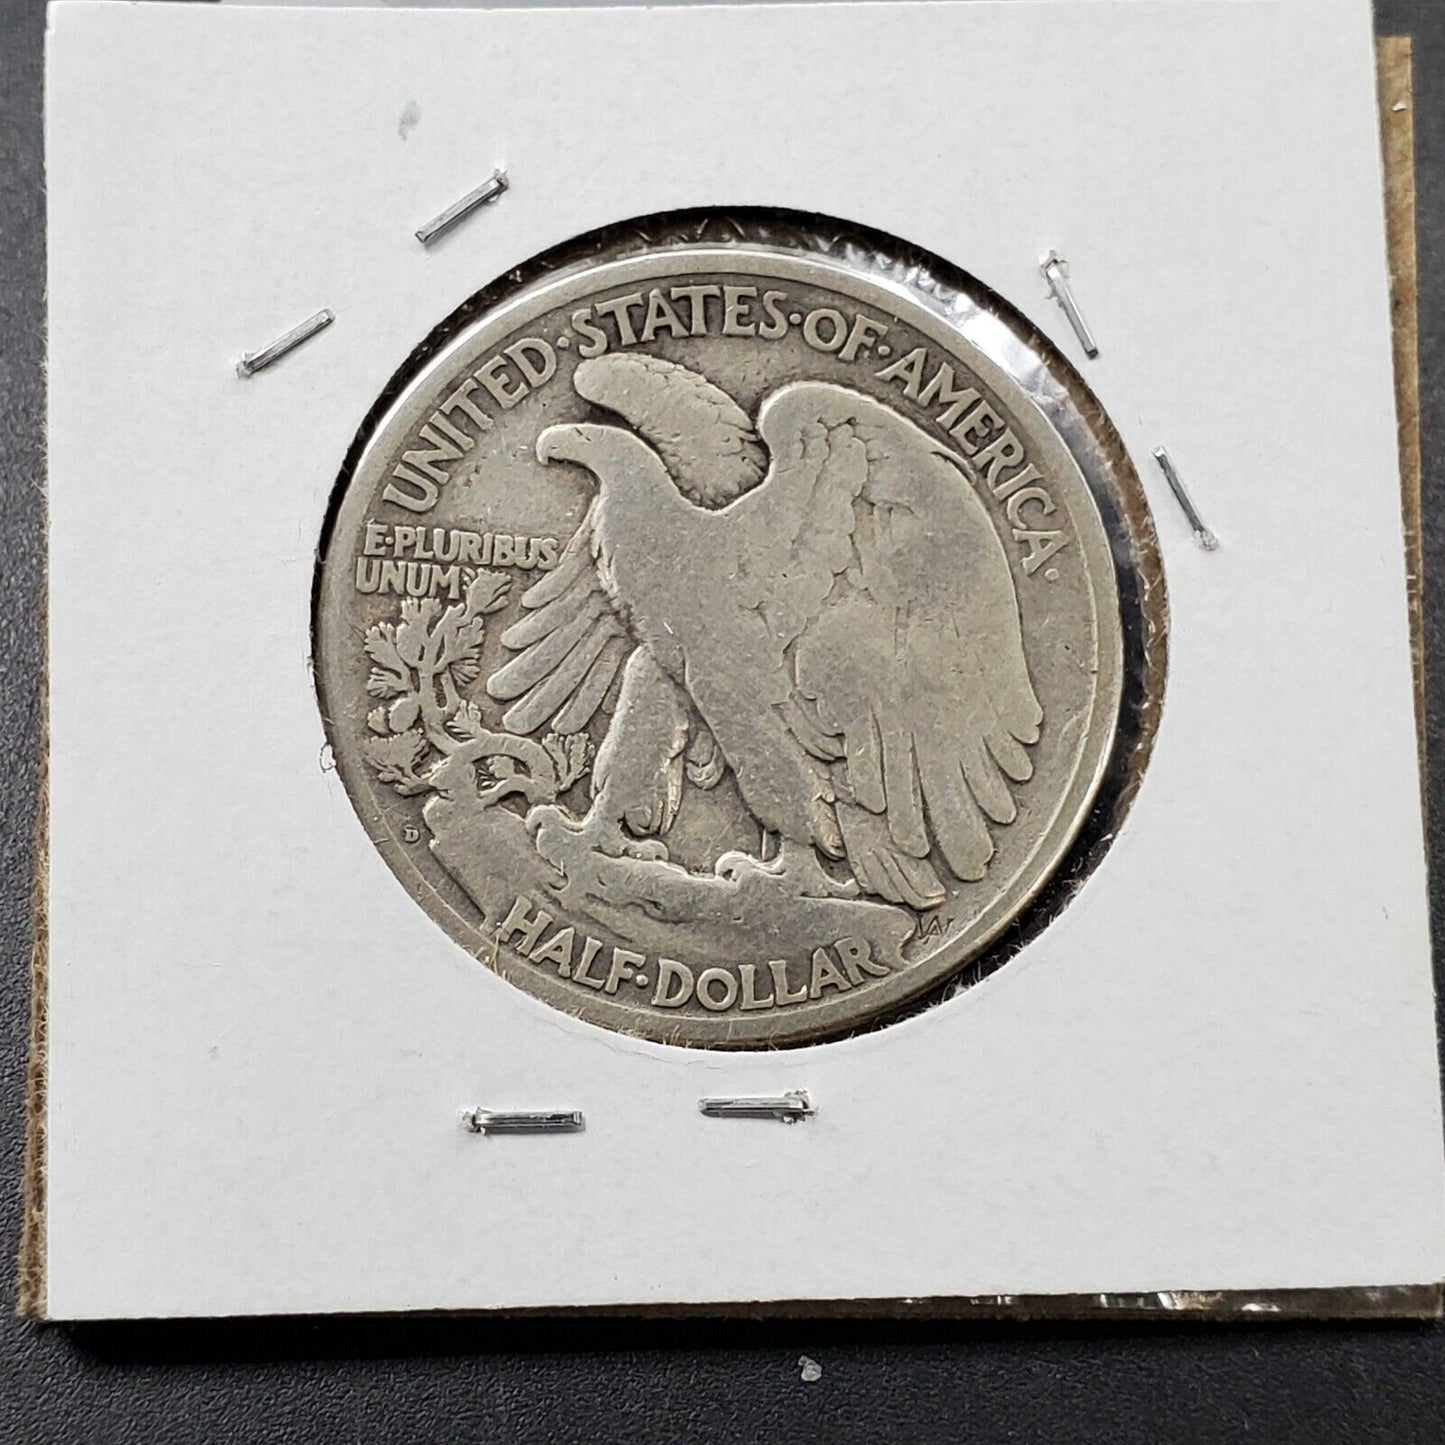 1917 D REV Walking Liberty Silver Eagle Half Dollar Coin Choice Fine / VF